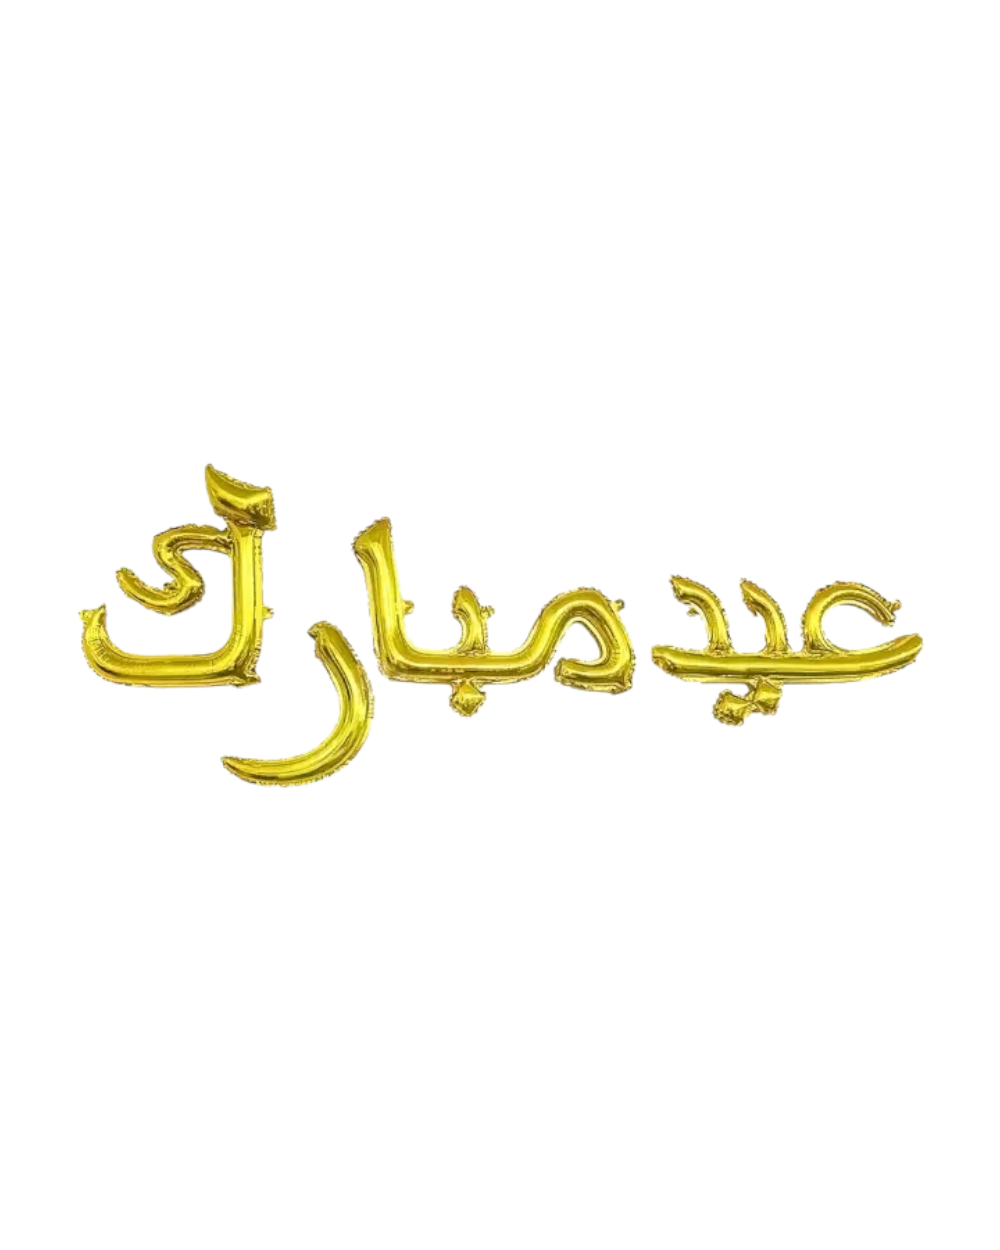 Ballons lettres eid mubarak en arabe| lettres de ballon dorés| déco eid mubarak